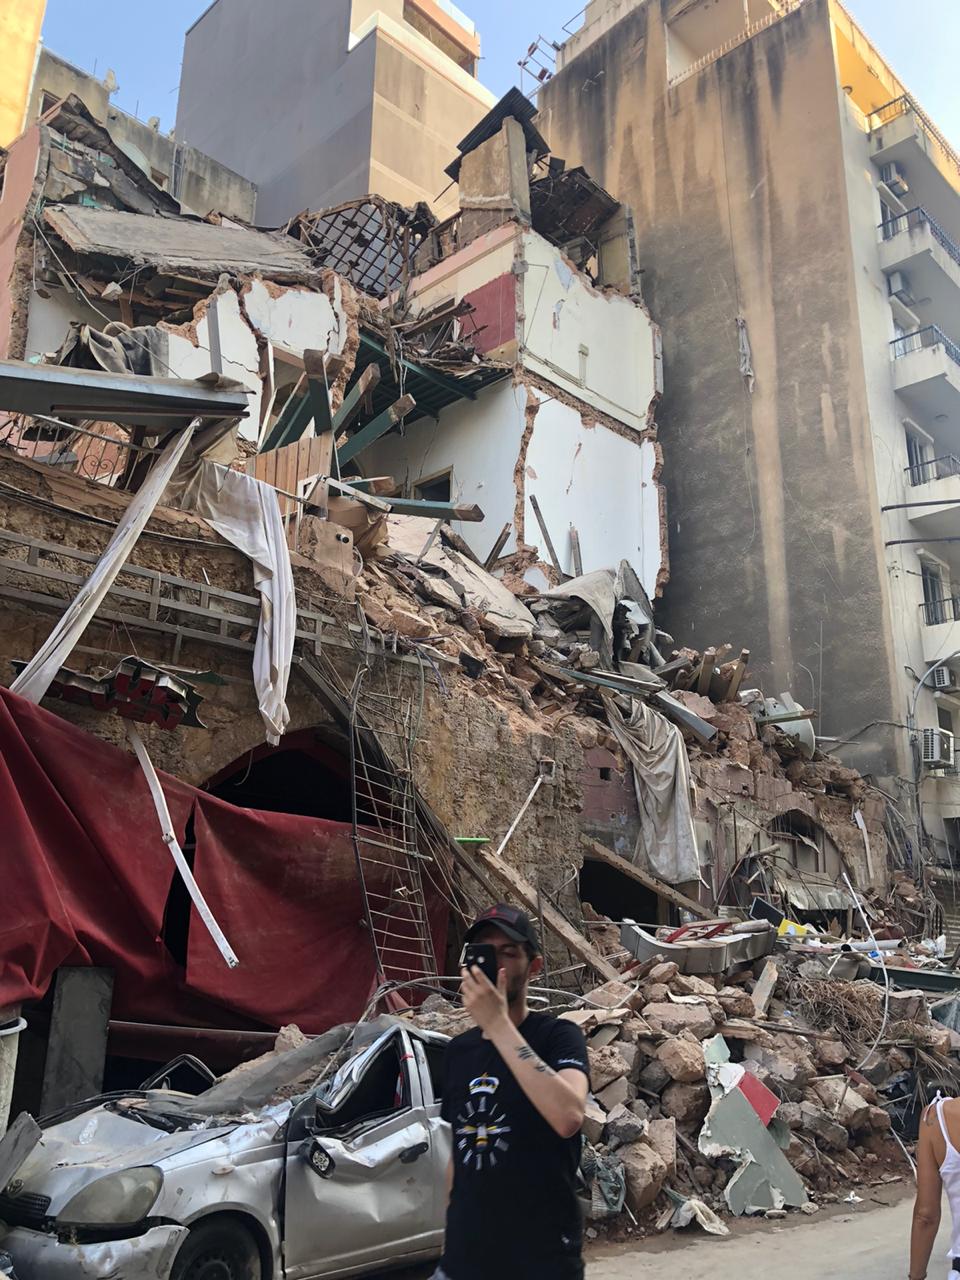 Scenes of destruction on the streets of Lebanon